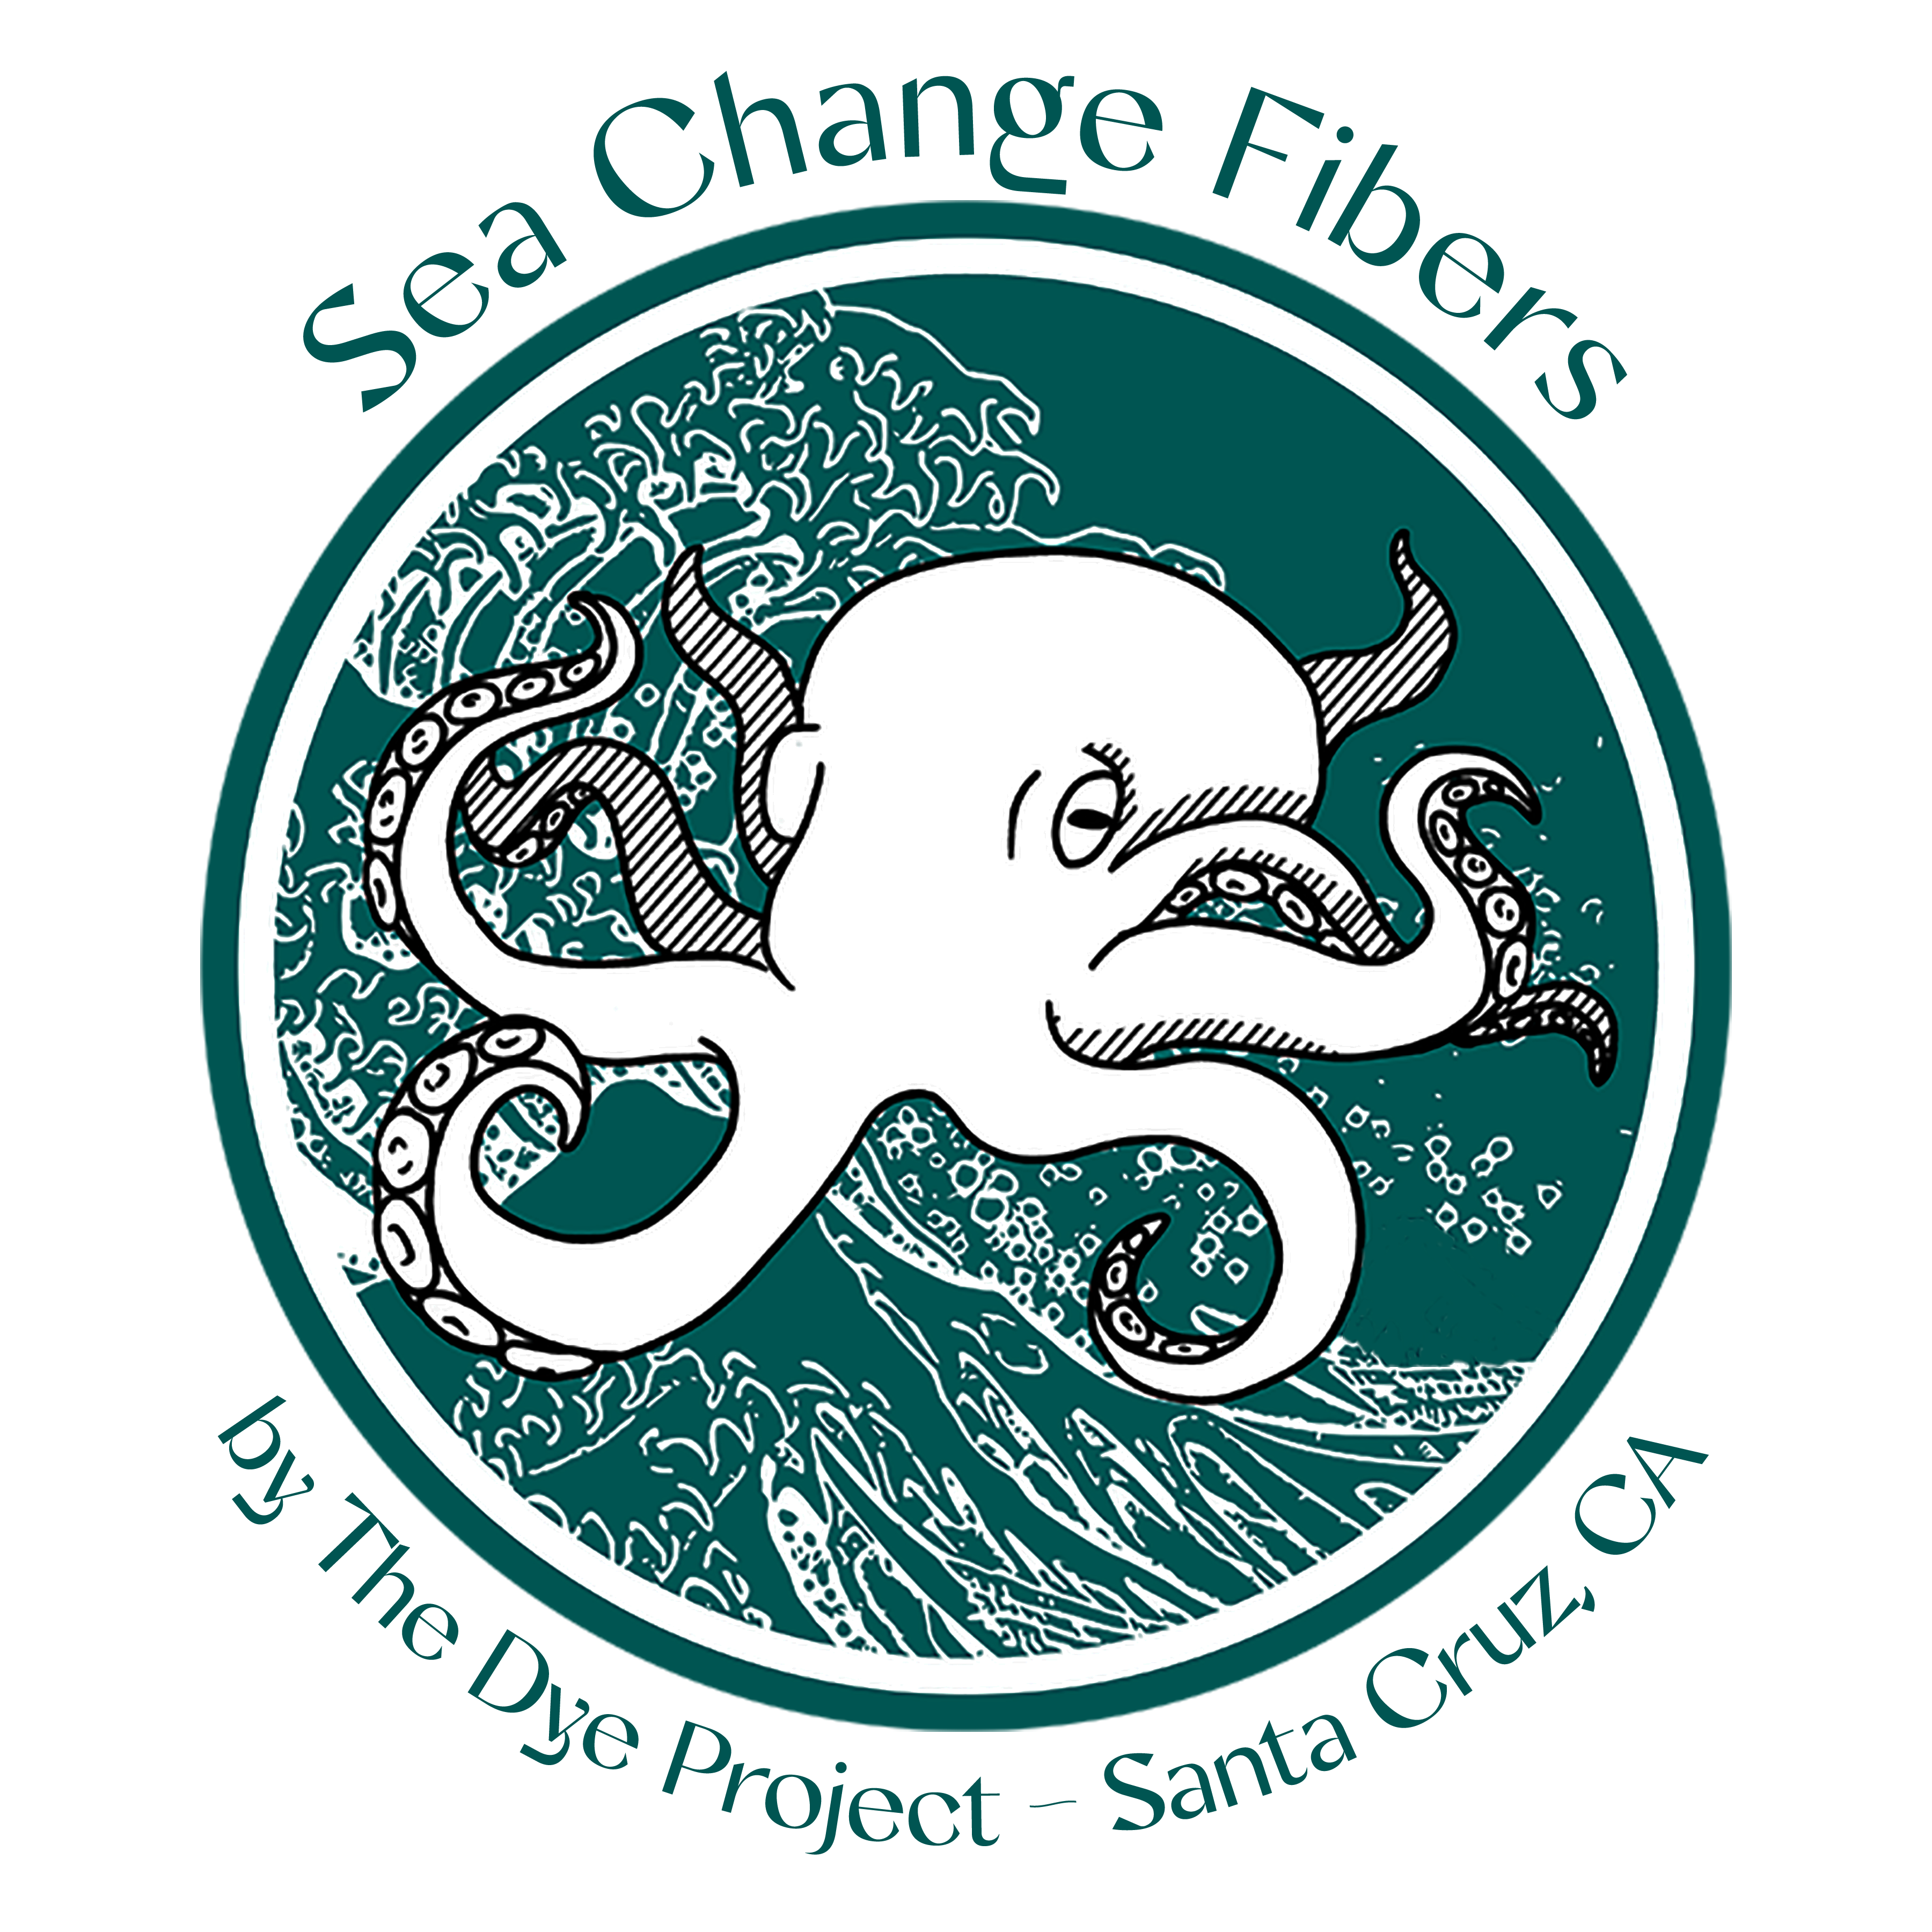 Sea Change Fibers